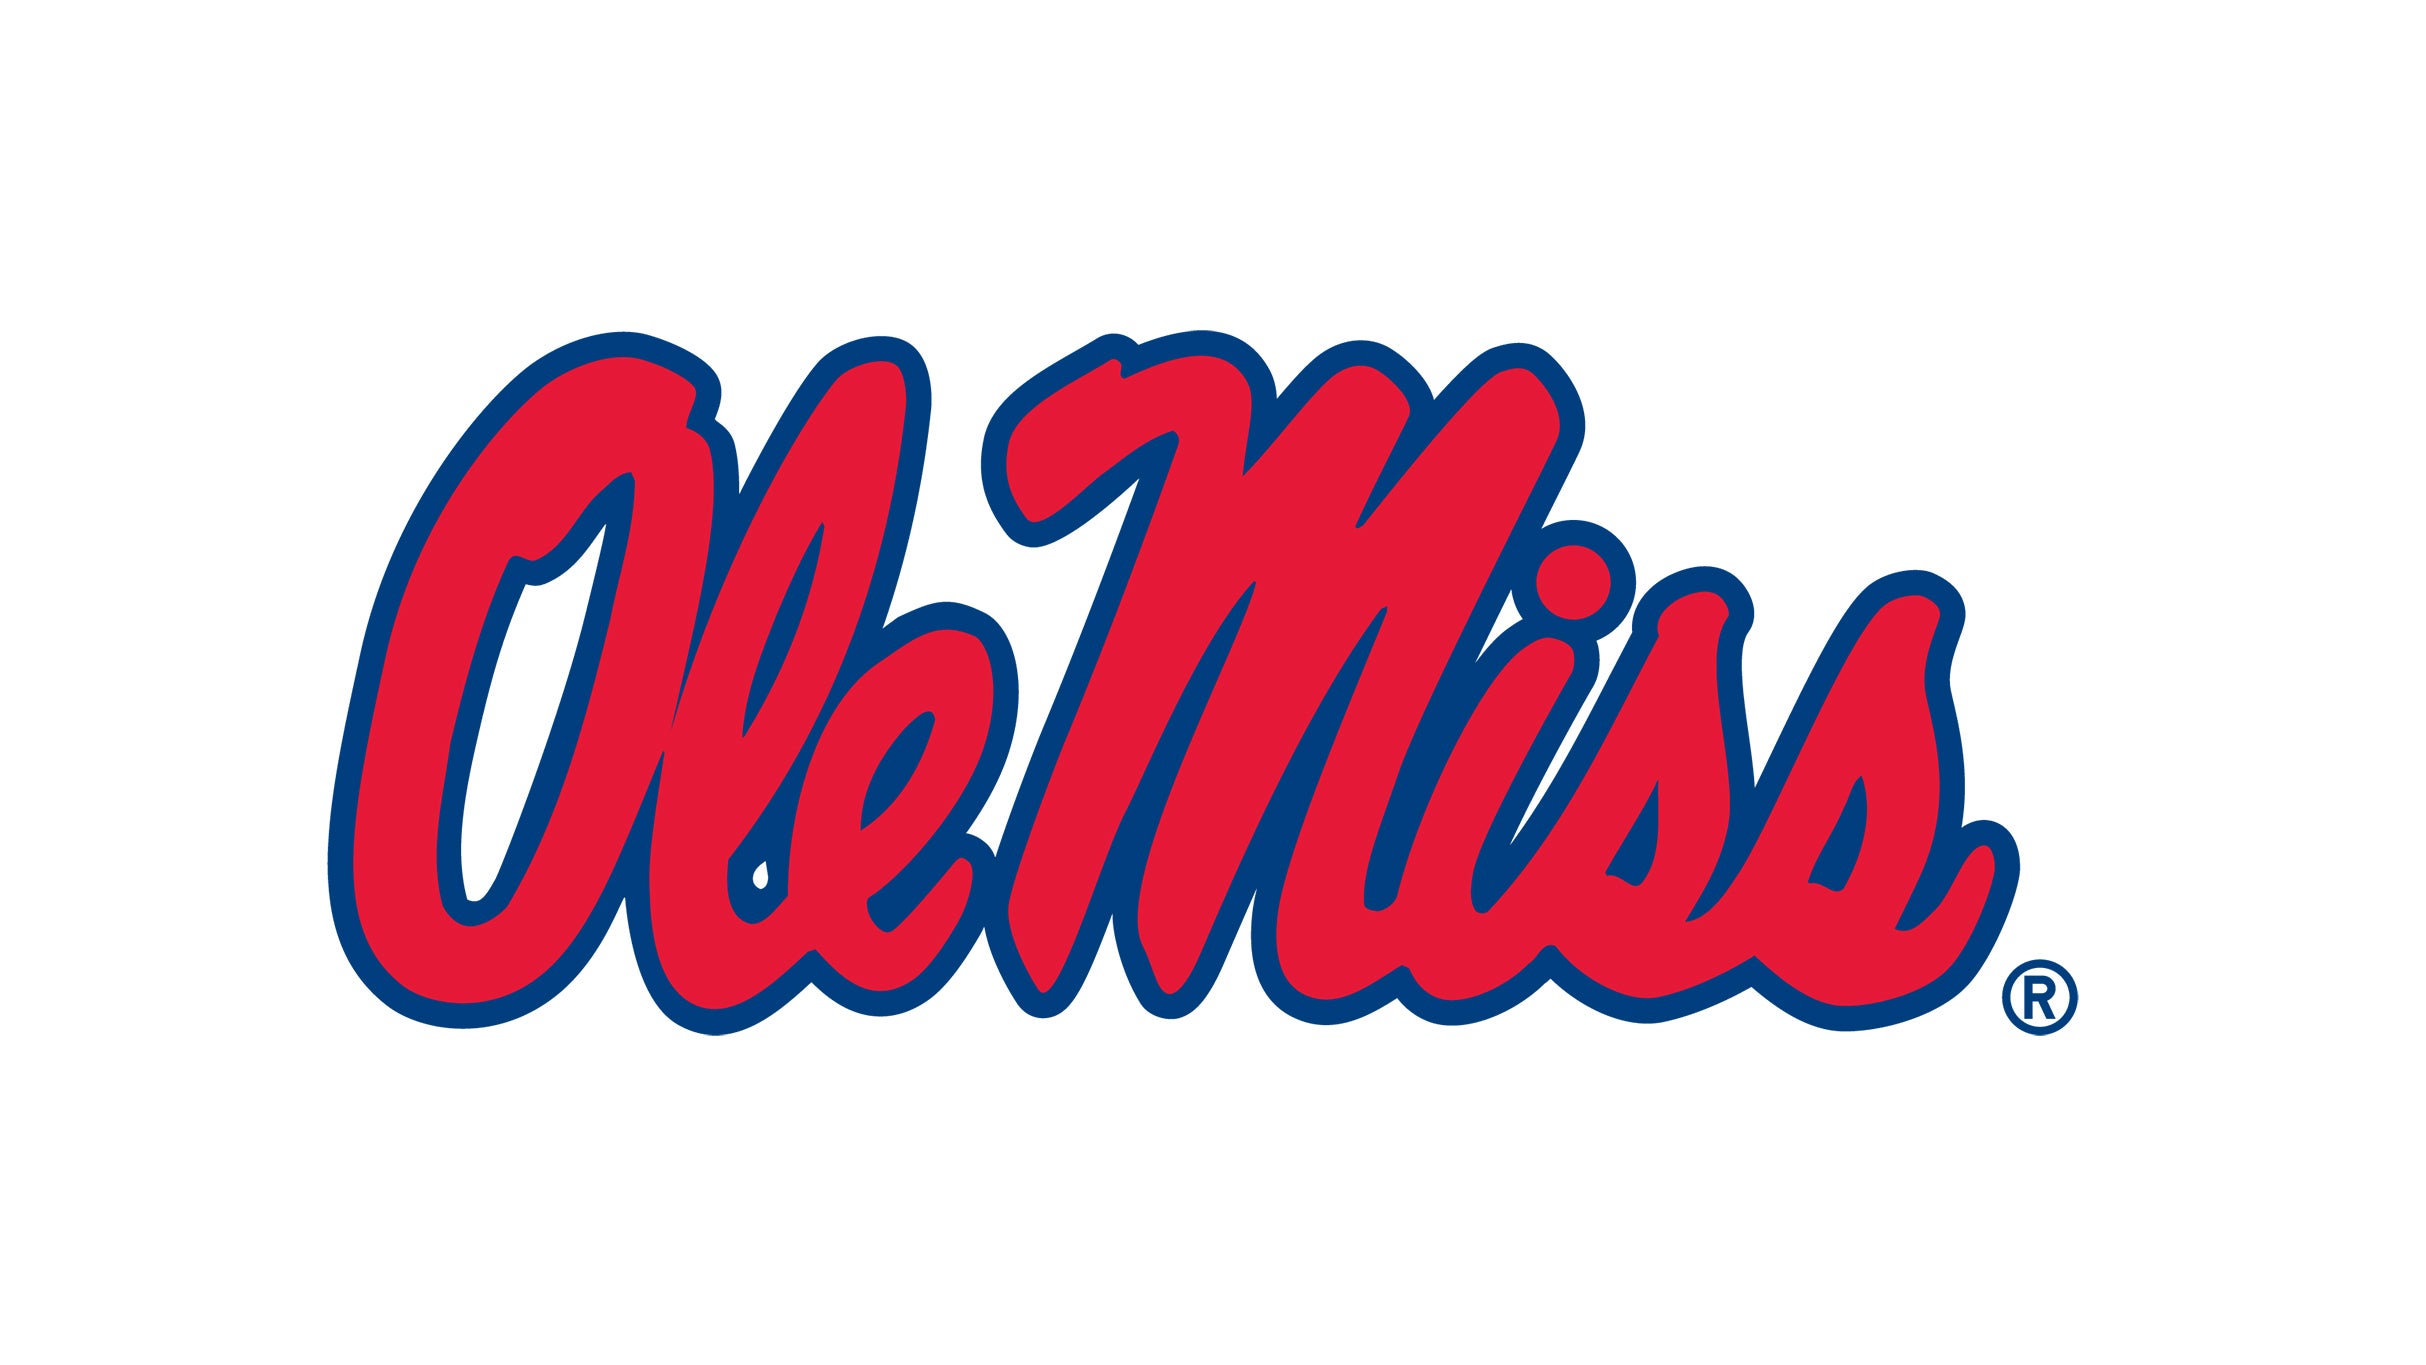 Ole Miss Rebels Football vs. Mississippi State Bulldogs Football hero